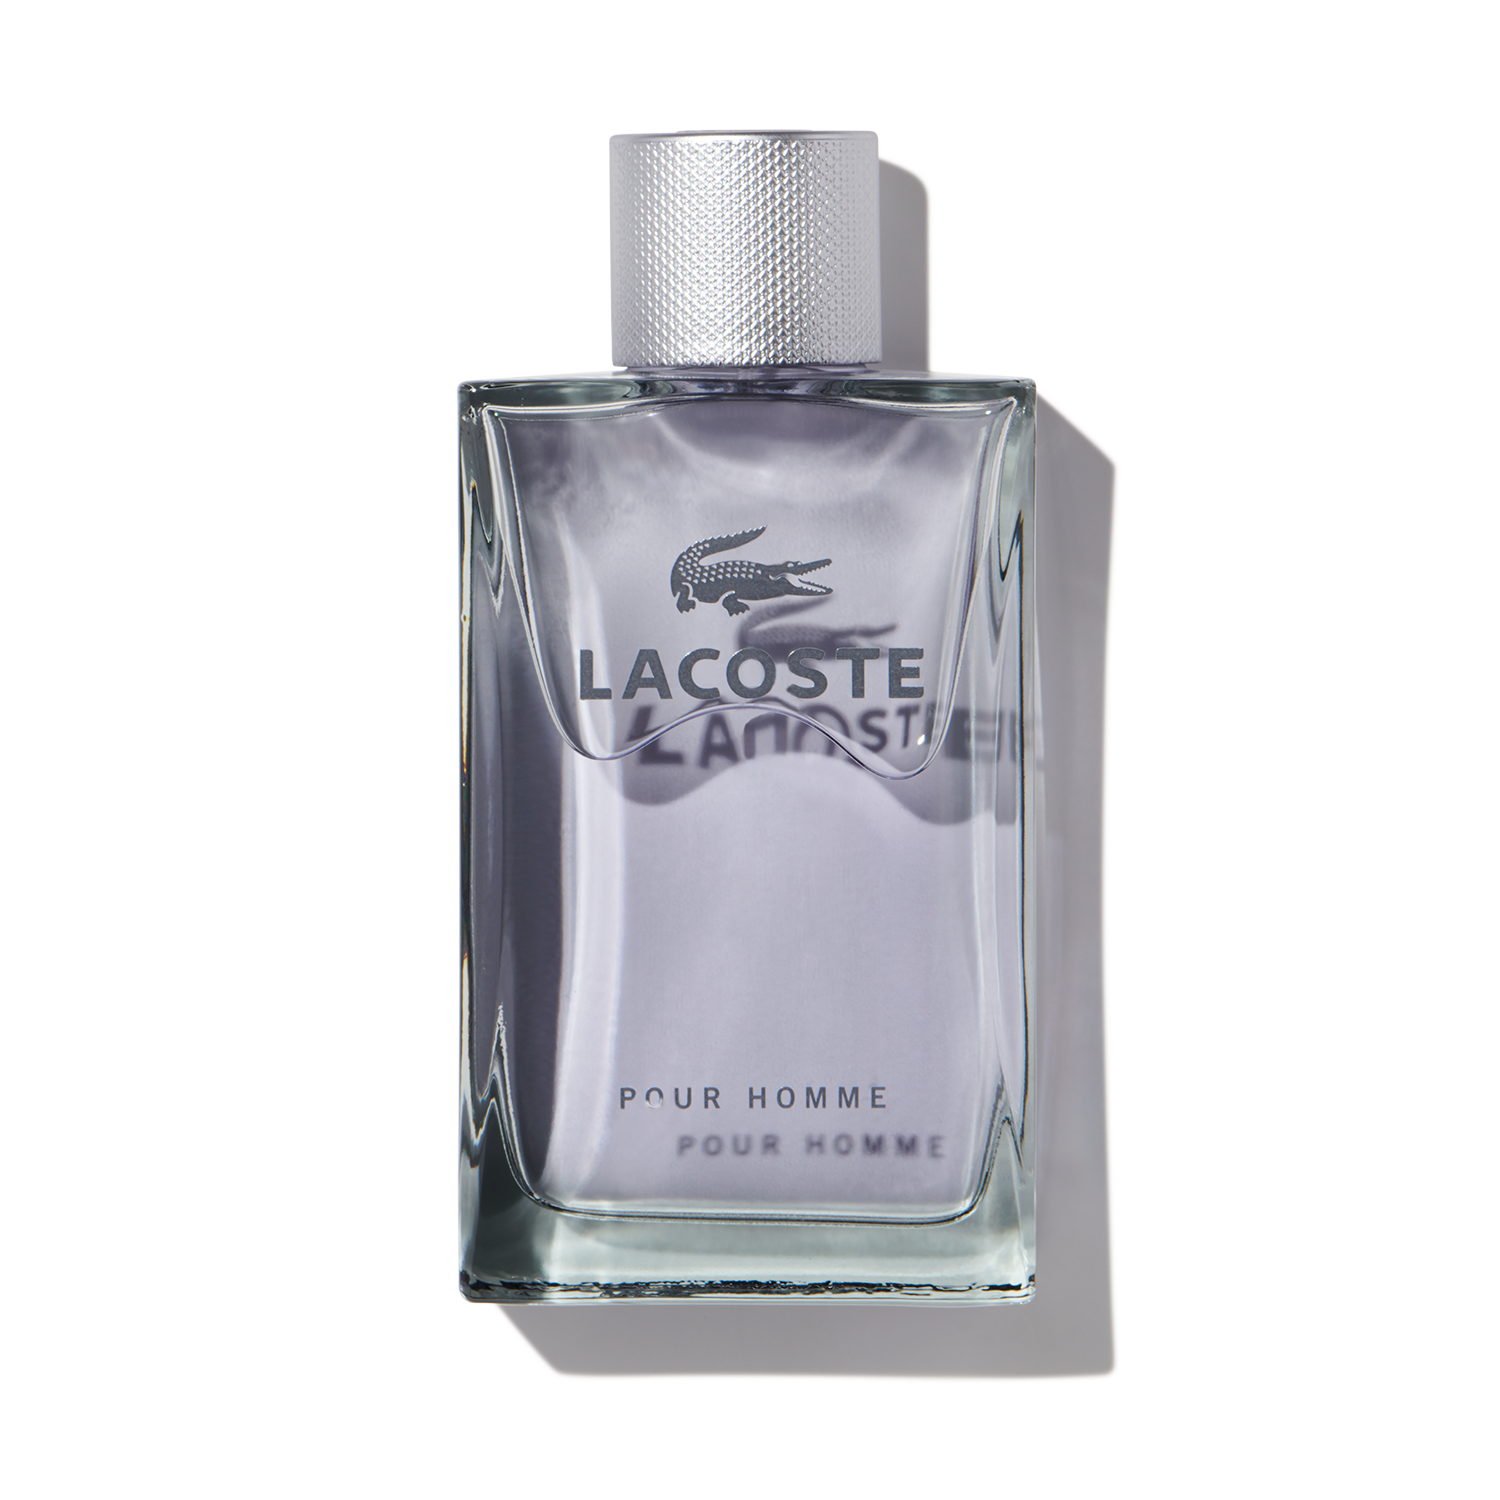 Buy LACOSTE Lacoste Pour Homme cologne at